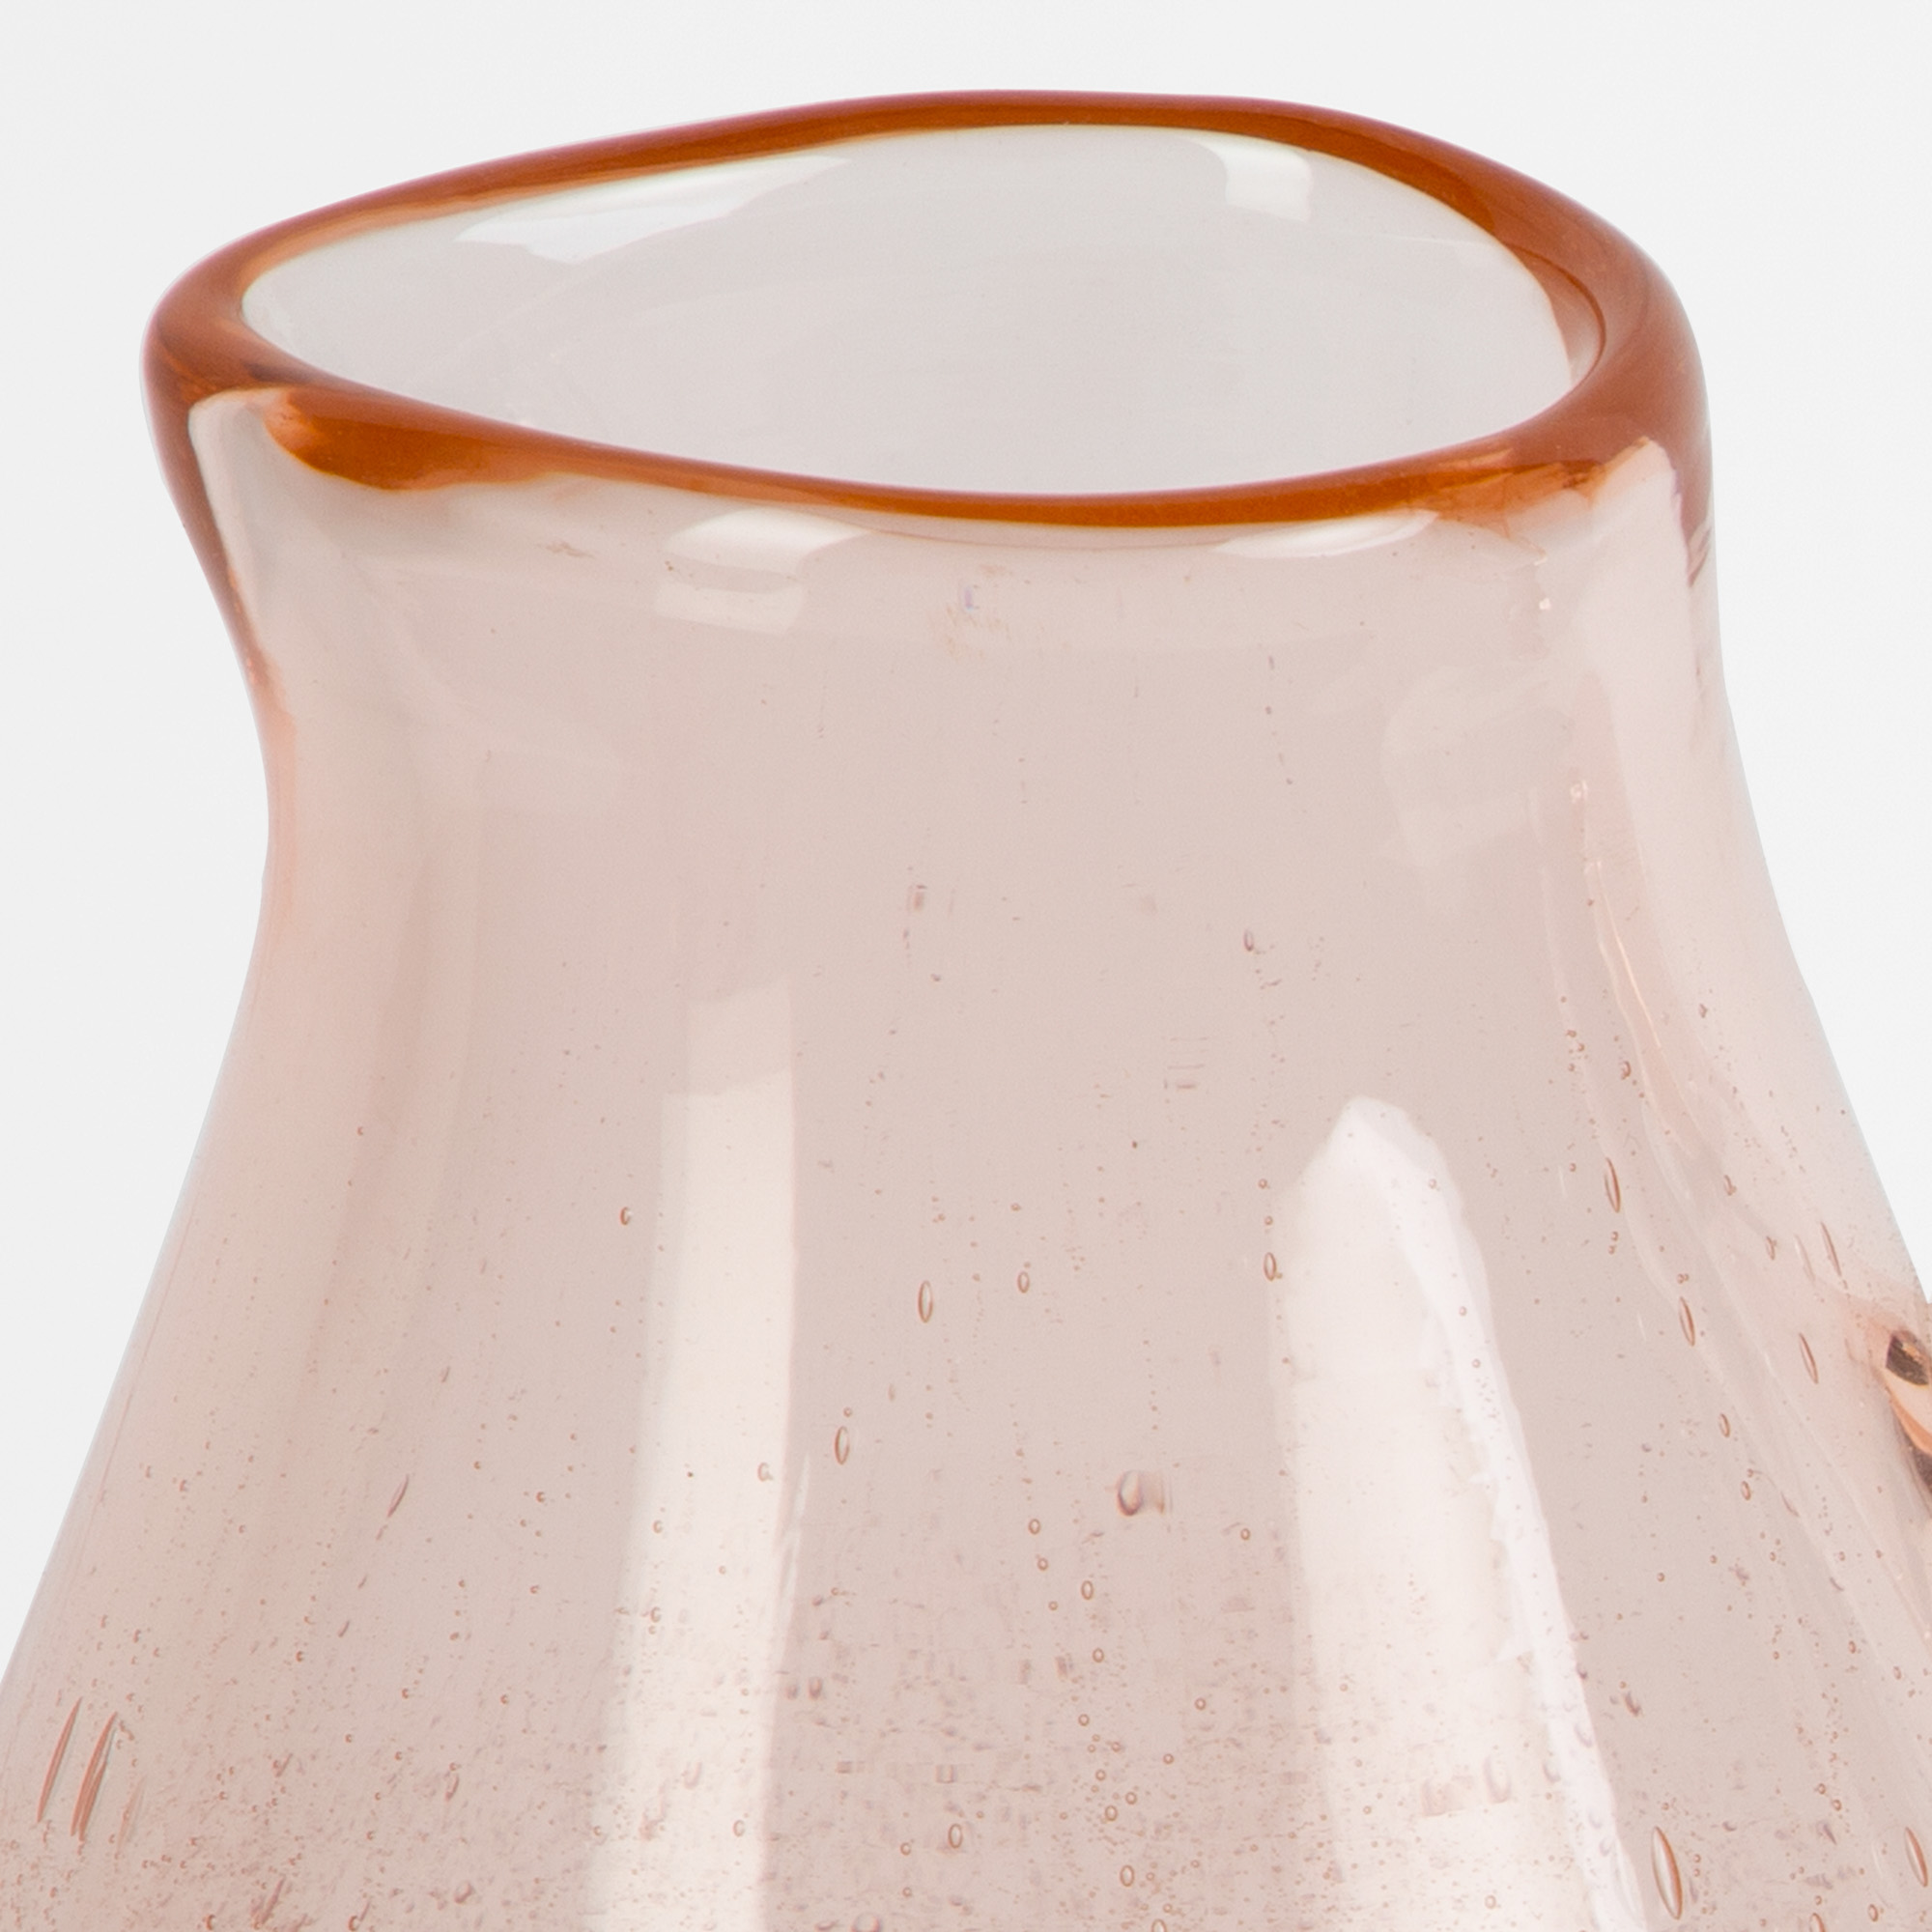 Amphora Glass Jug - Rose Gold